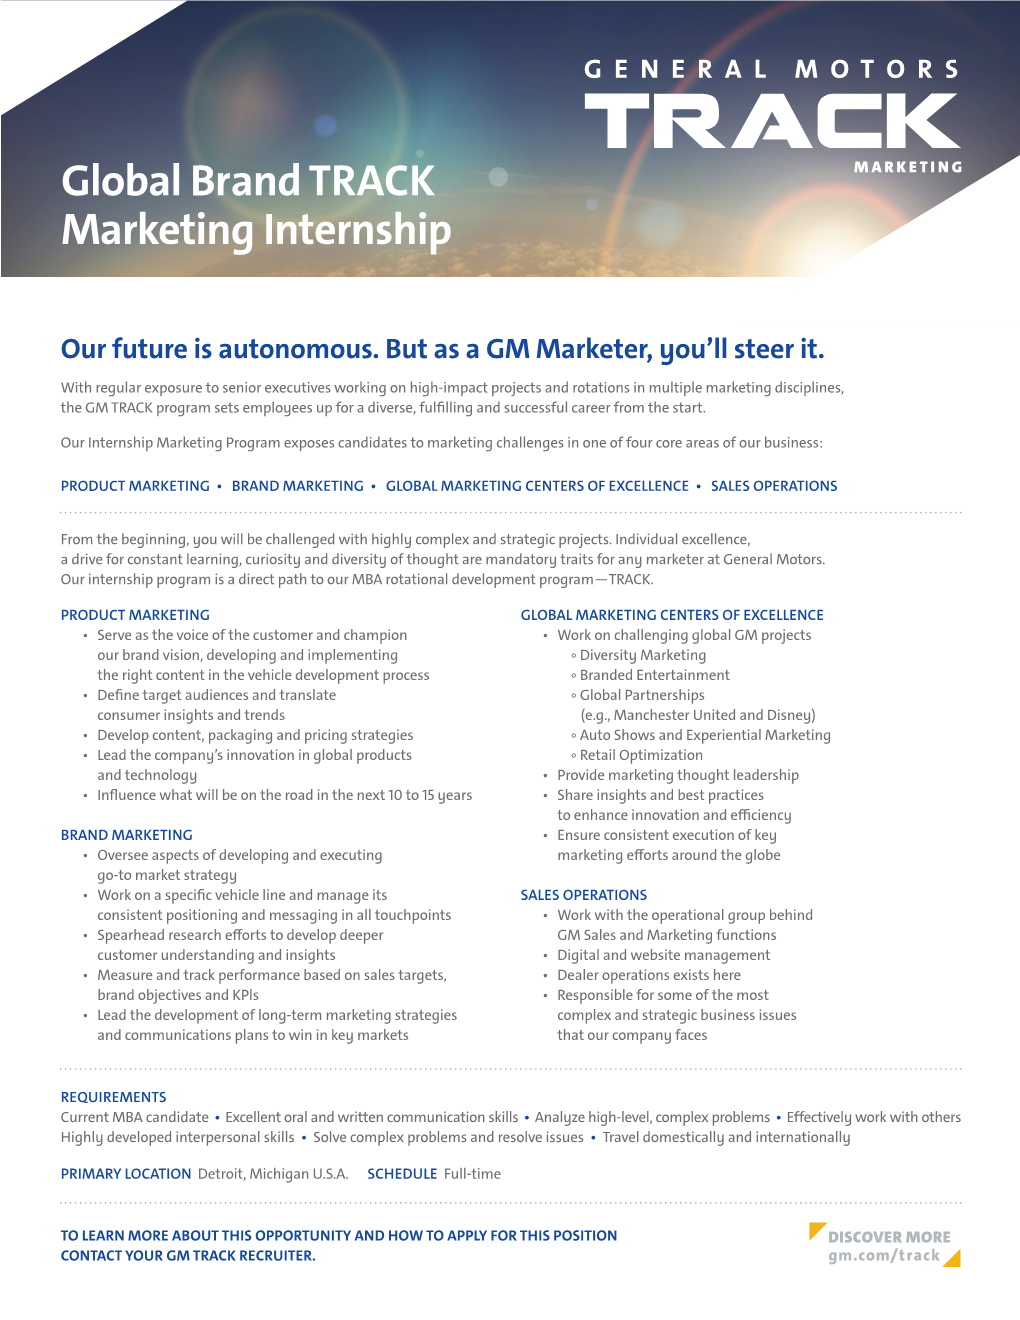 Global Brand TRACK Marketing Internship